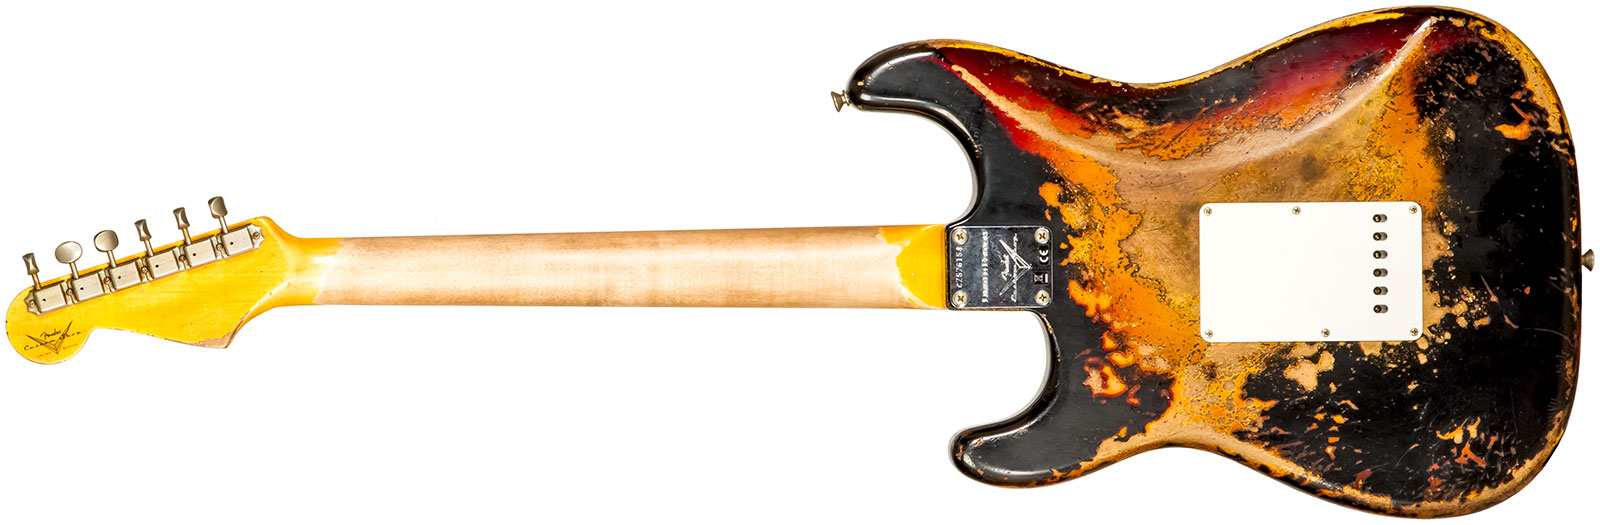 Fender Custom Shop Strat 1959 3s Trem Rw #cz576154 - Super Heavy Relic Black O. 3-color Sunburst - Elektrische gitaar in Str-vorm - Variation 1